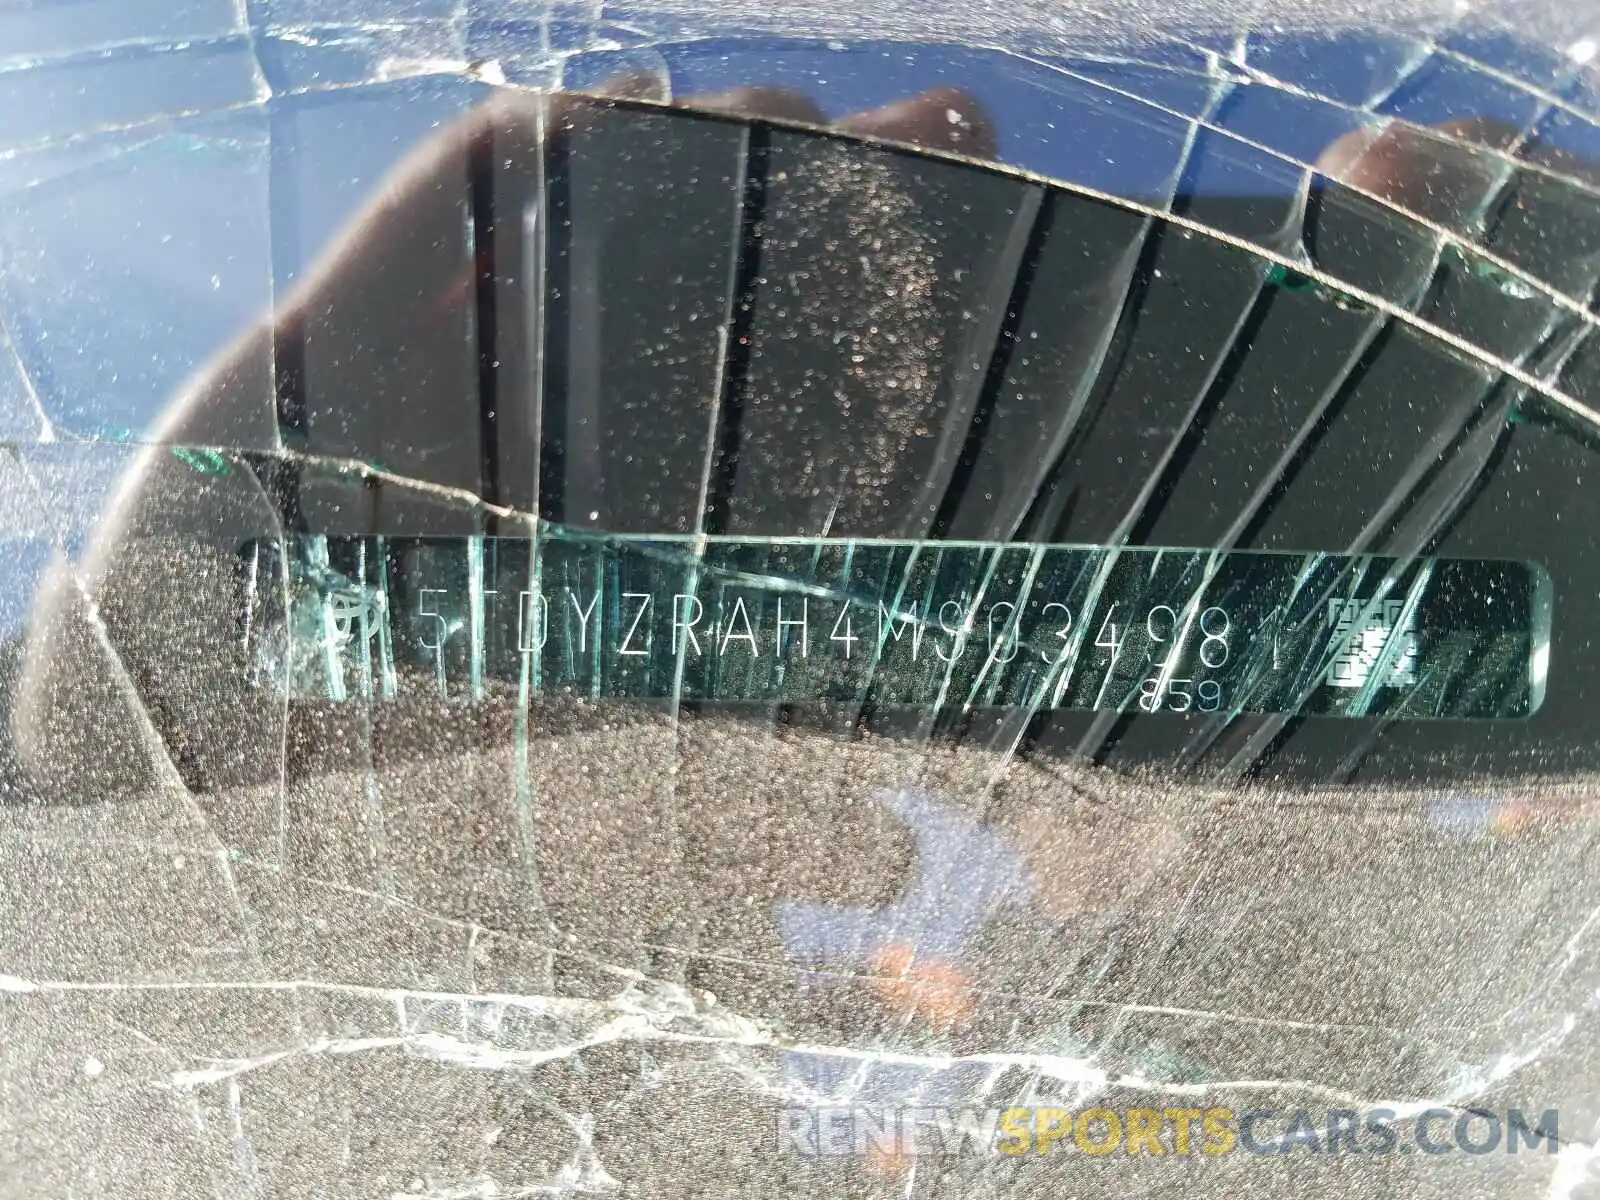 9 Photograph of a damaged car 5TDYZRAH4MS034981 TOYOTA HIGHLANDER 2021